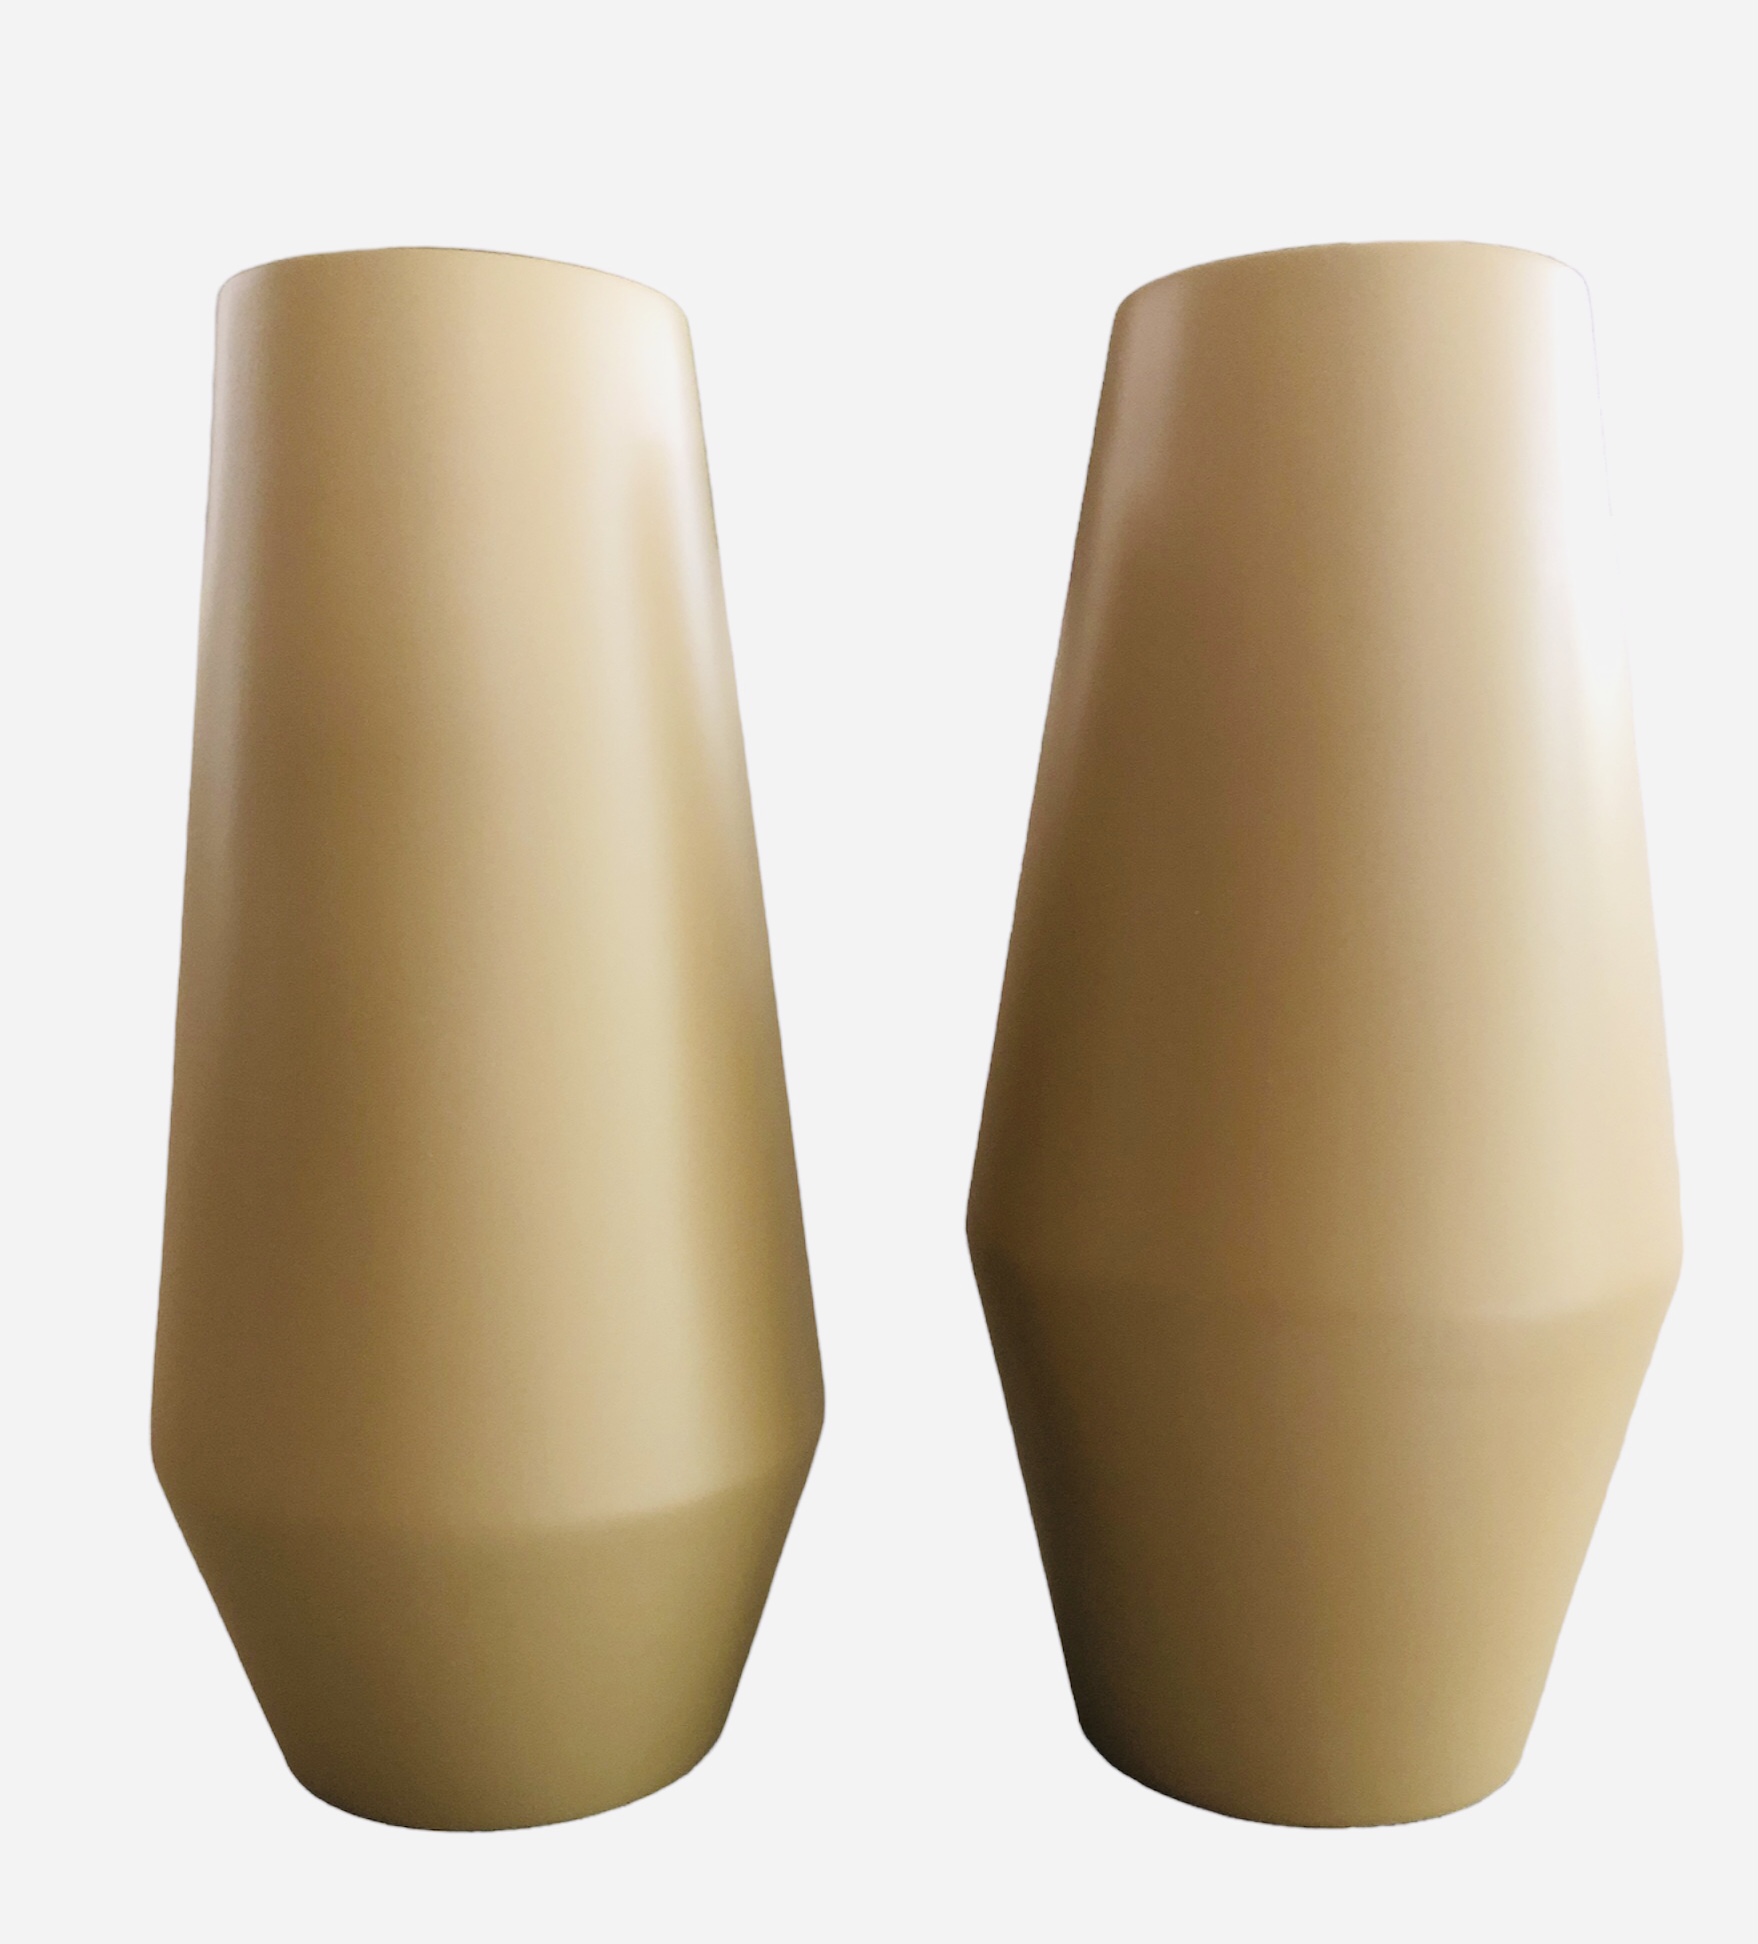 Dupla de Vasos Decorativos Grandes Bege em Cerâmica - Kit 2 Pçs. - Loren  Casa e Presentes